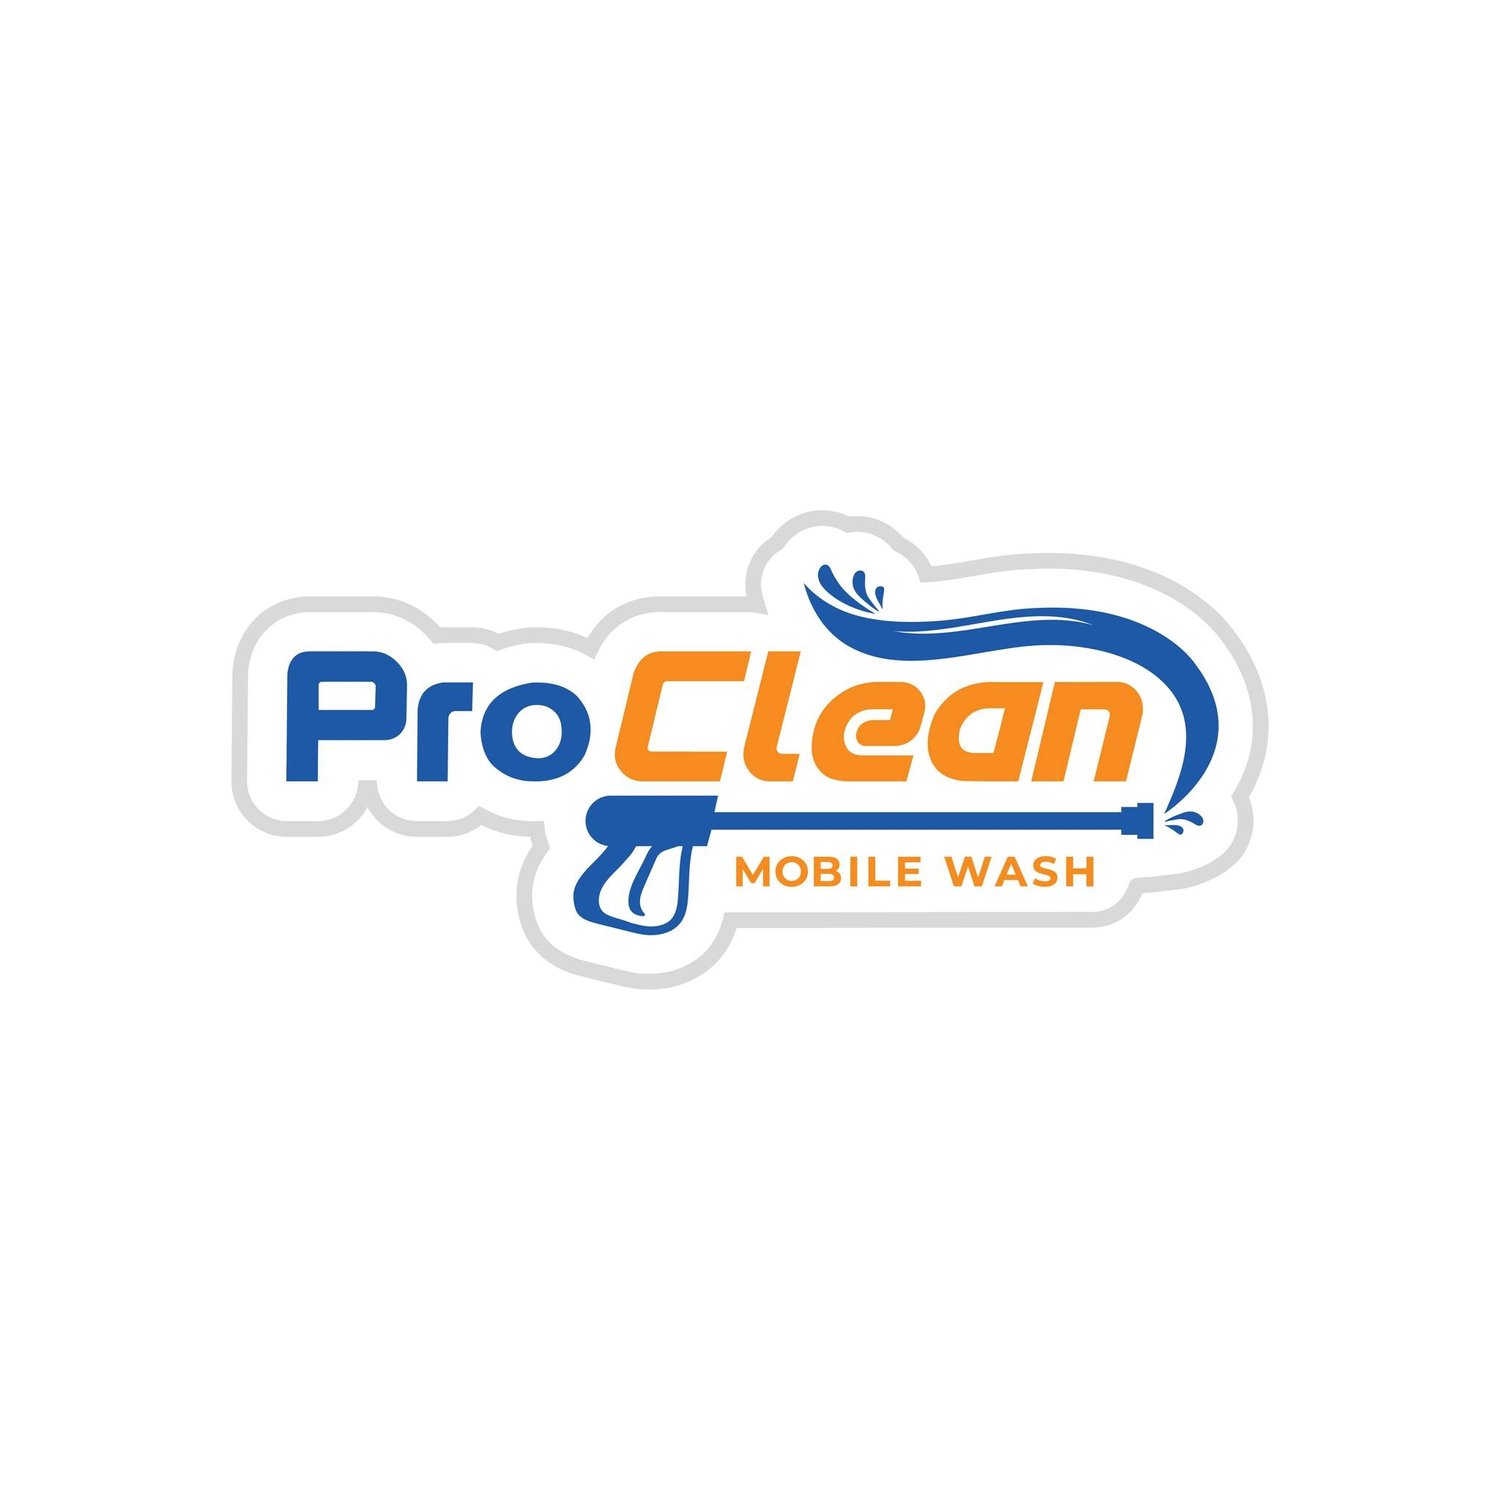 Pro Clean Mobile Wash